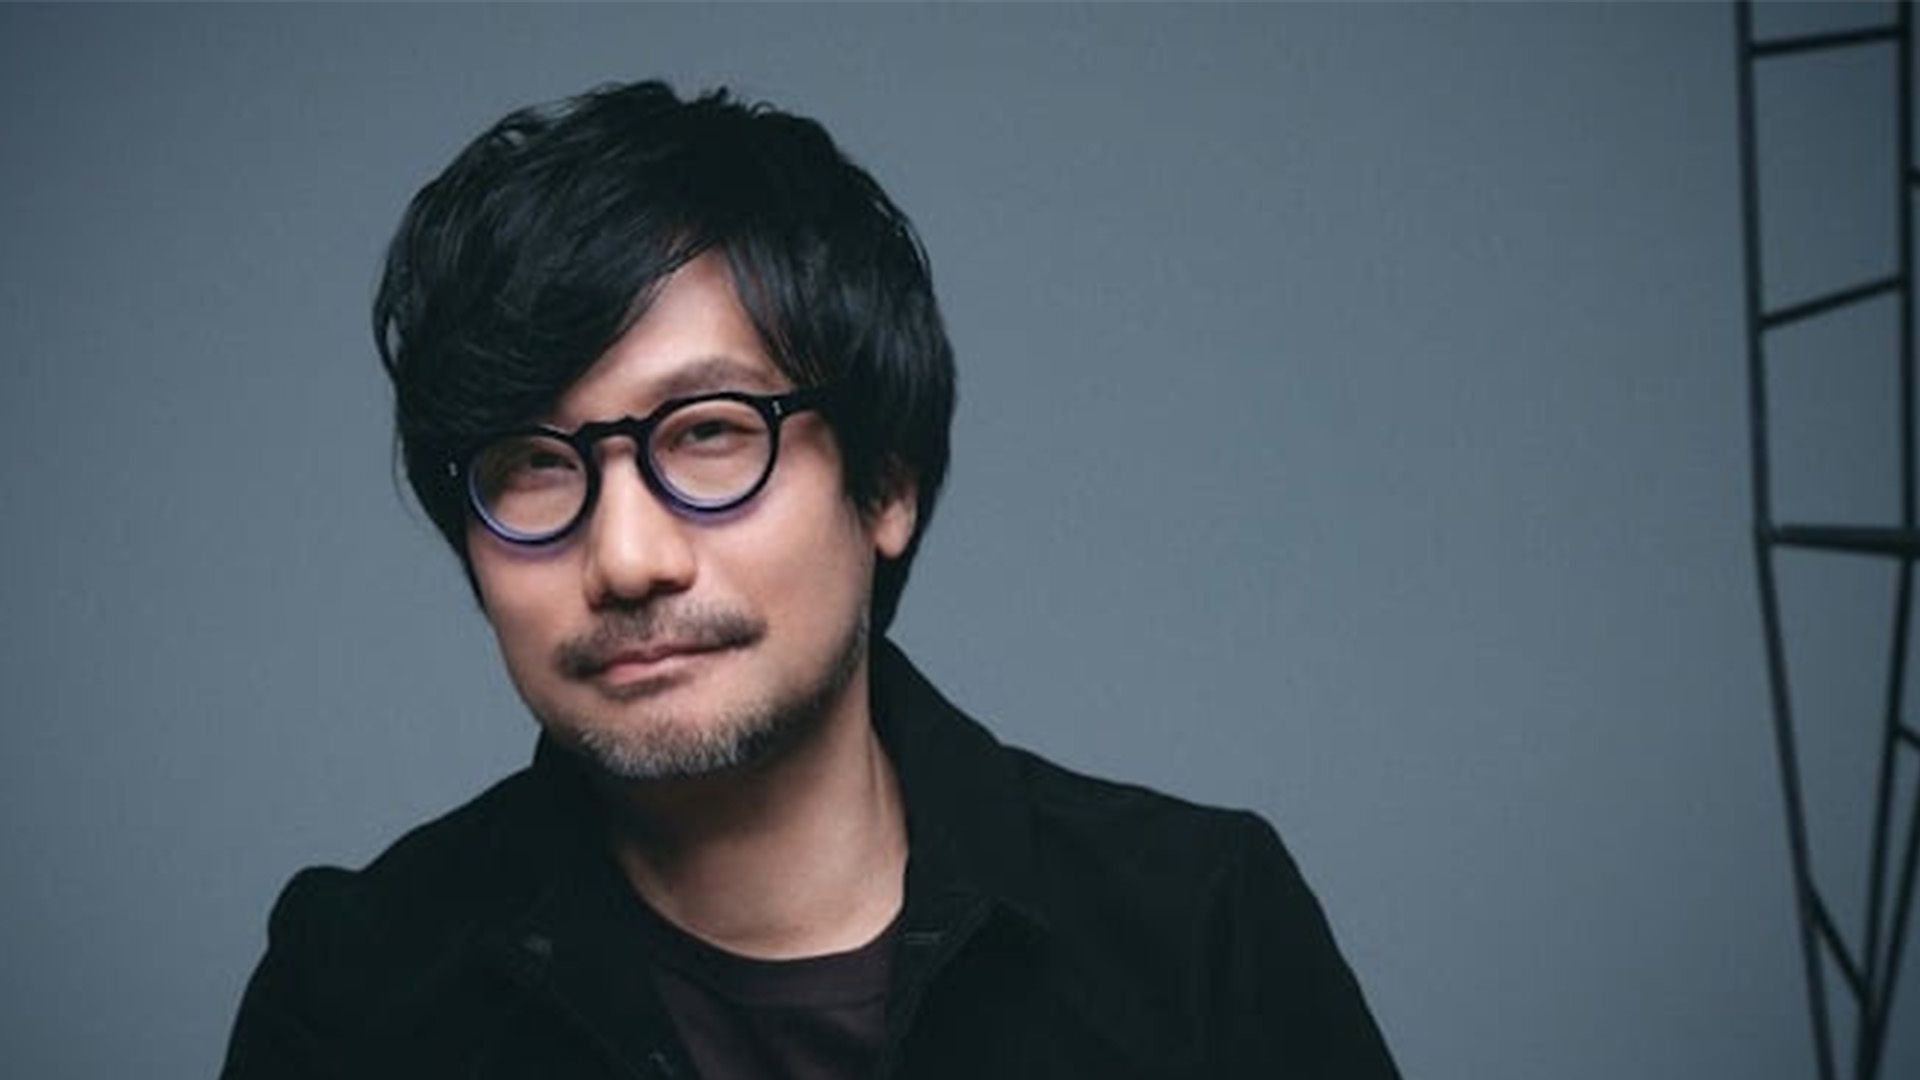 Hideo Kojima: Connecting Worlds Trailer